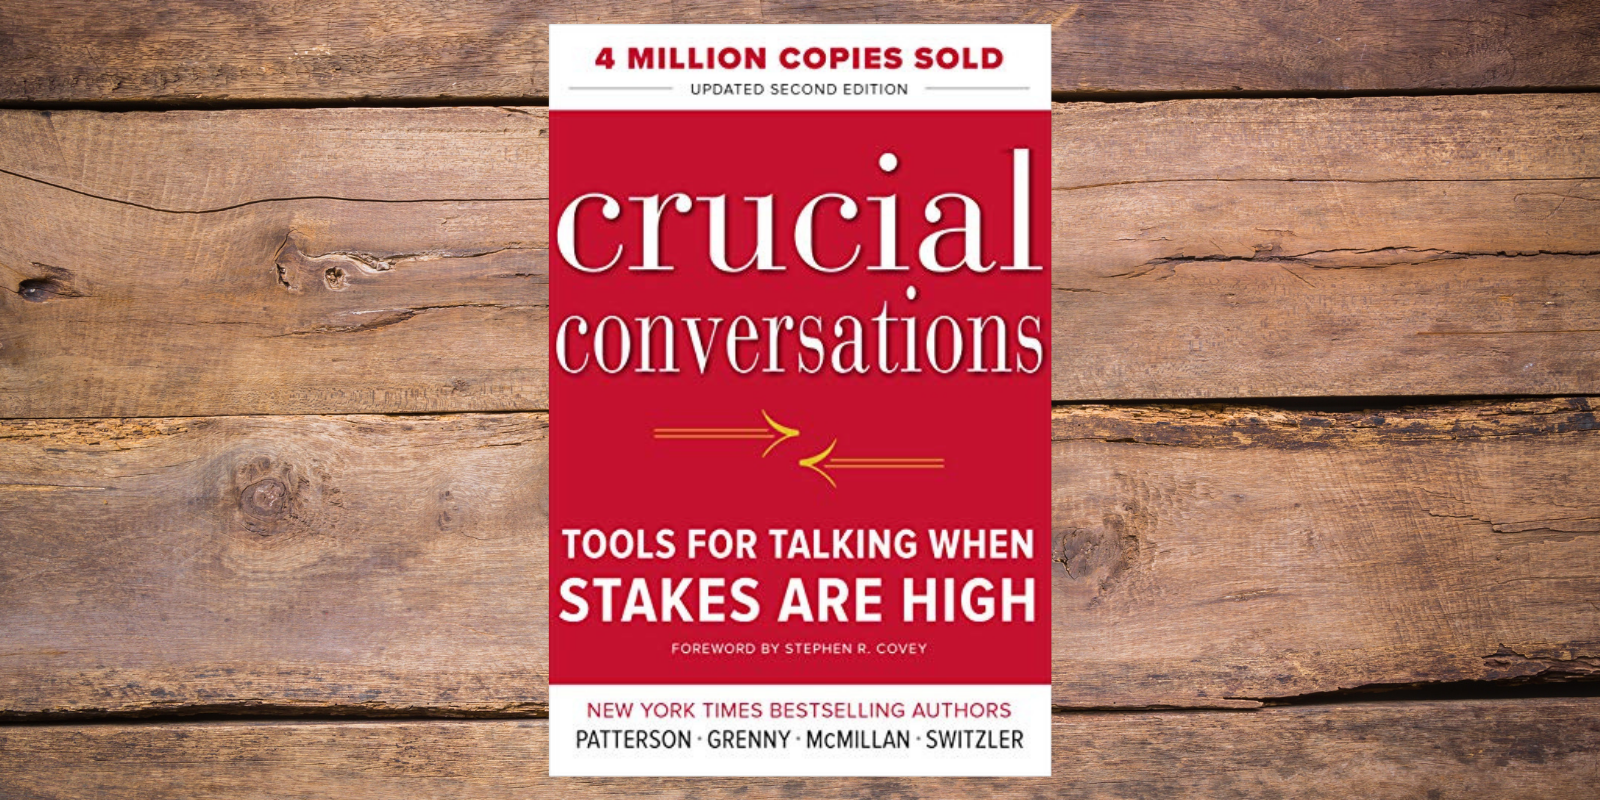 Crucial conversations pdf | Download crucial conversations pdf